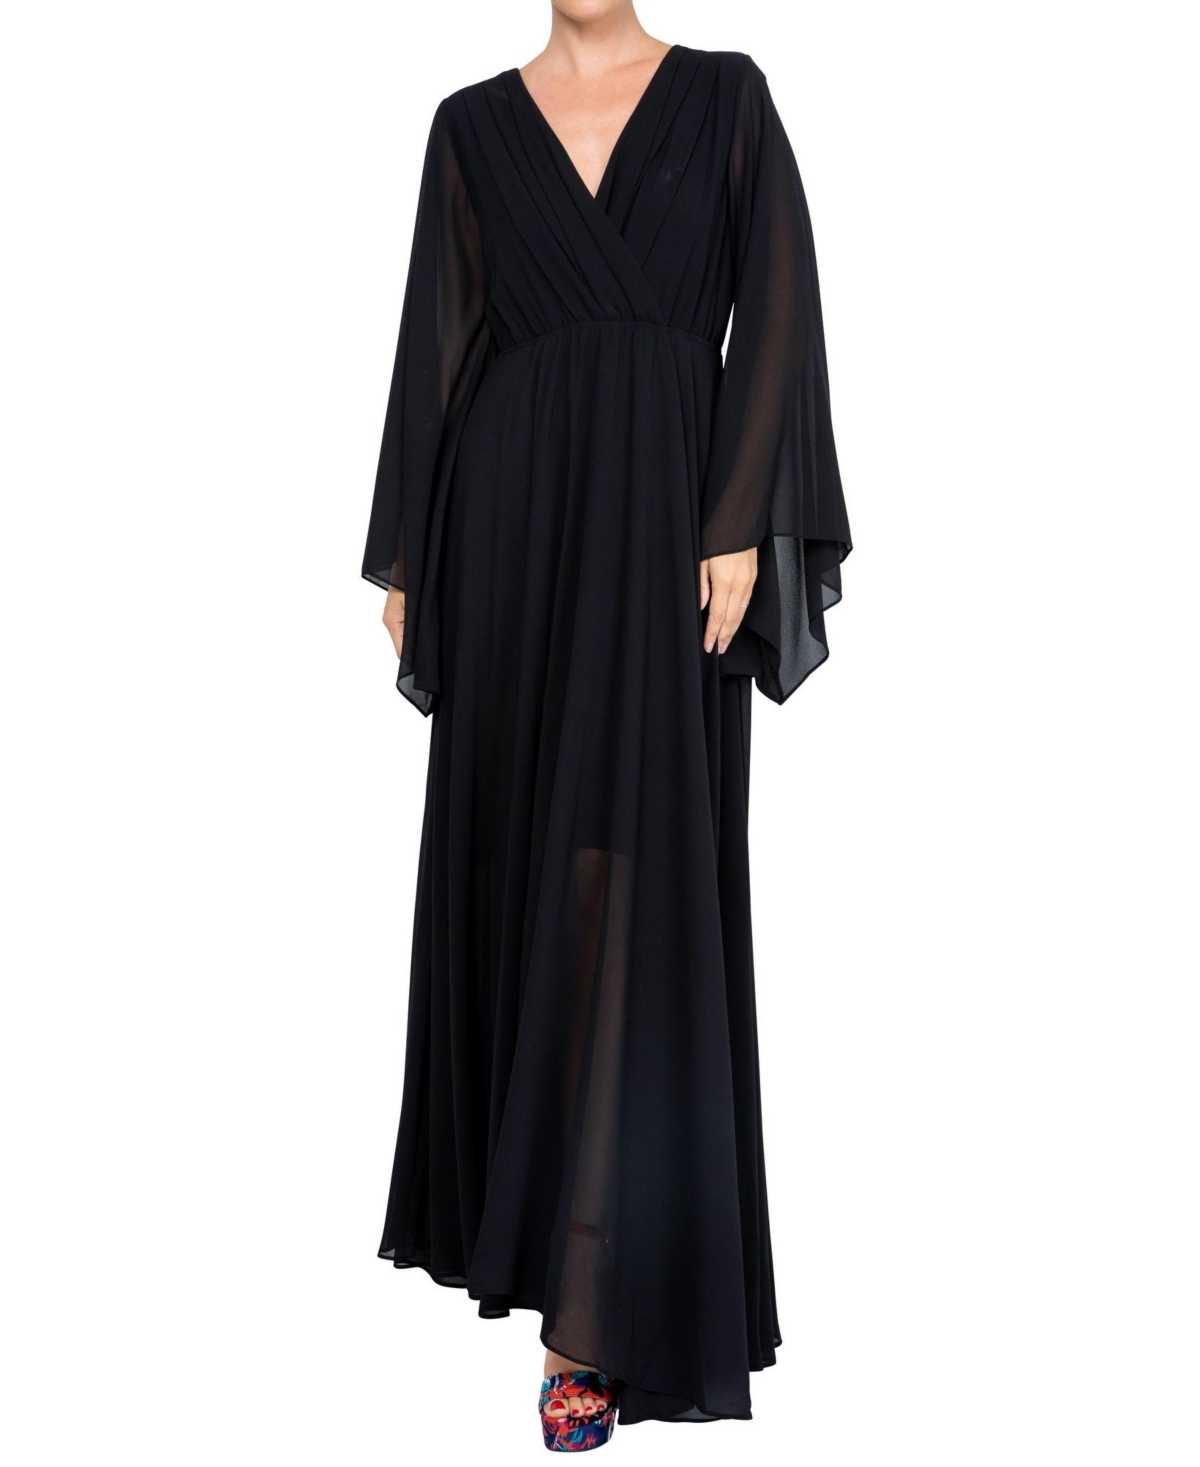 Women's Sunset Maxi Dress - Dahlia black